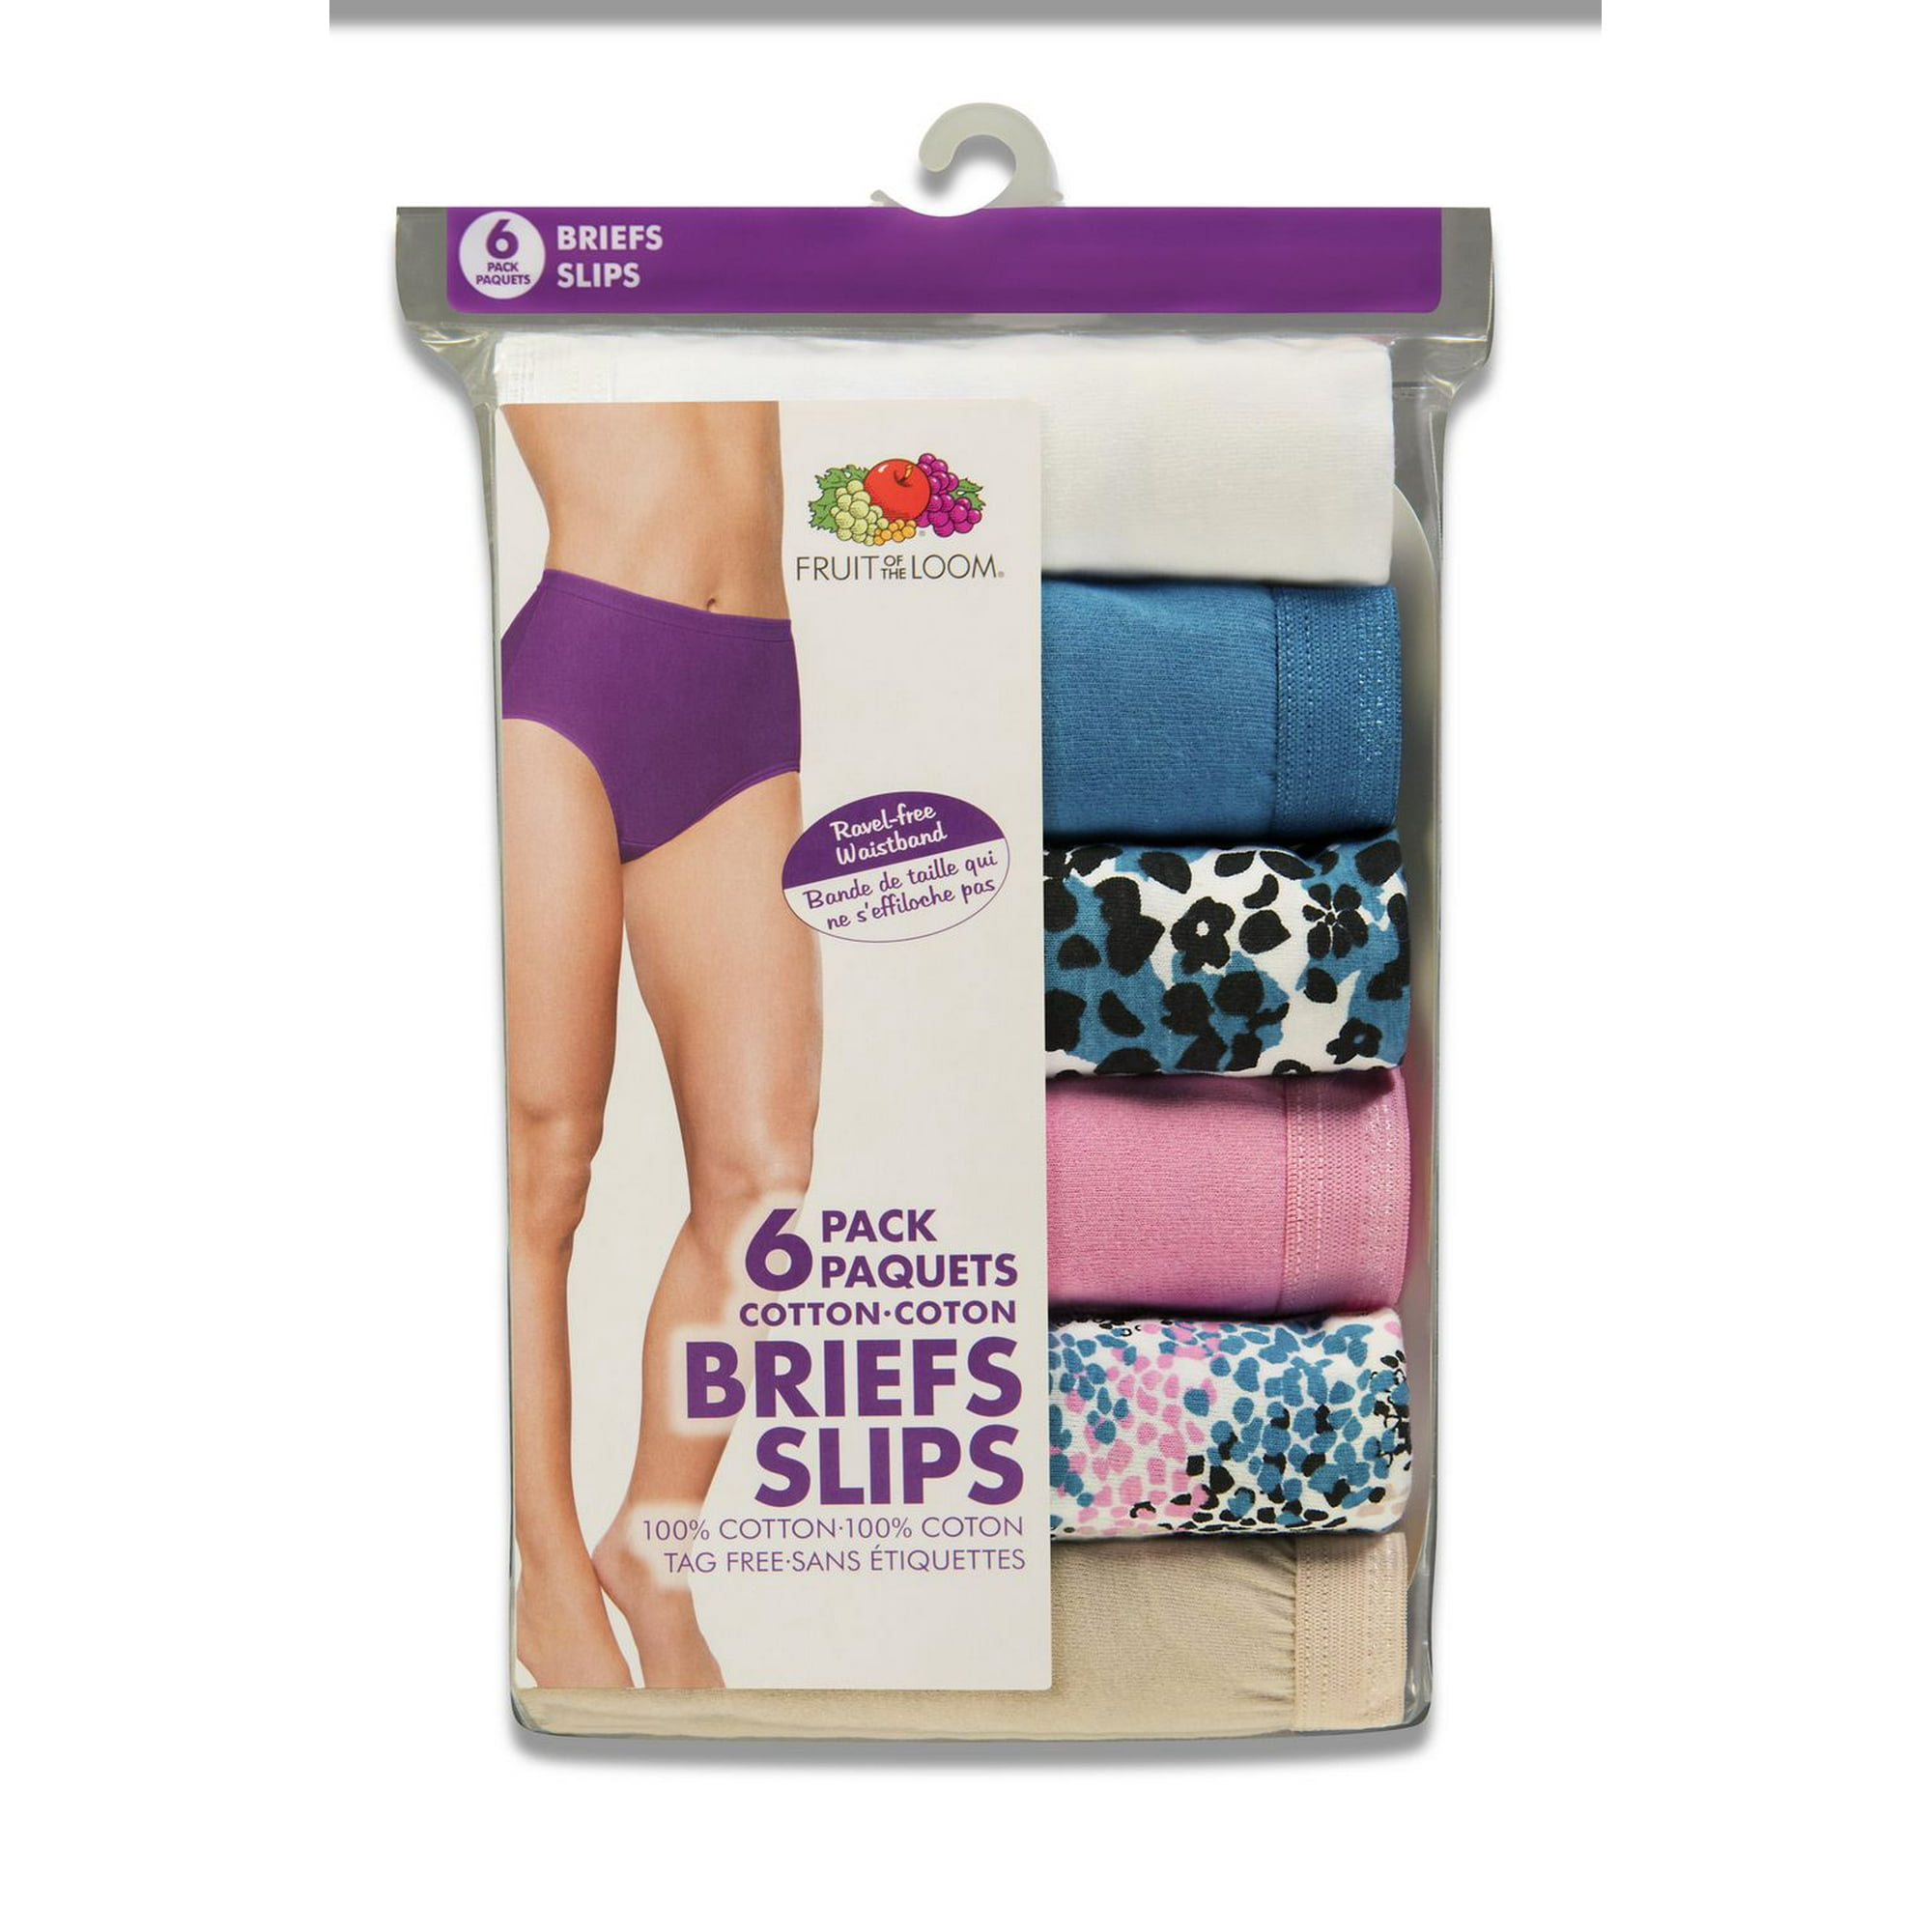 FairyShop Pack of 2 Soft Cotton Underwear for Ladies - 7RW